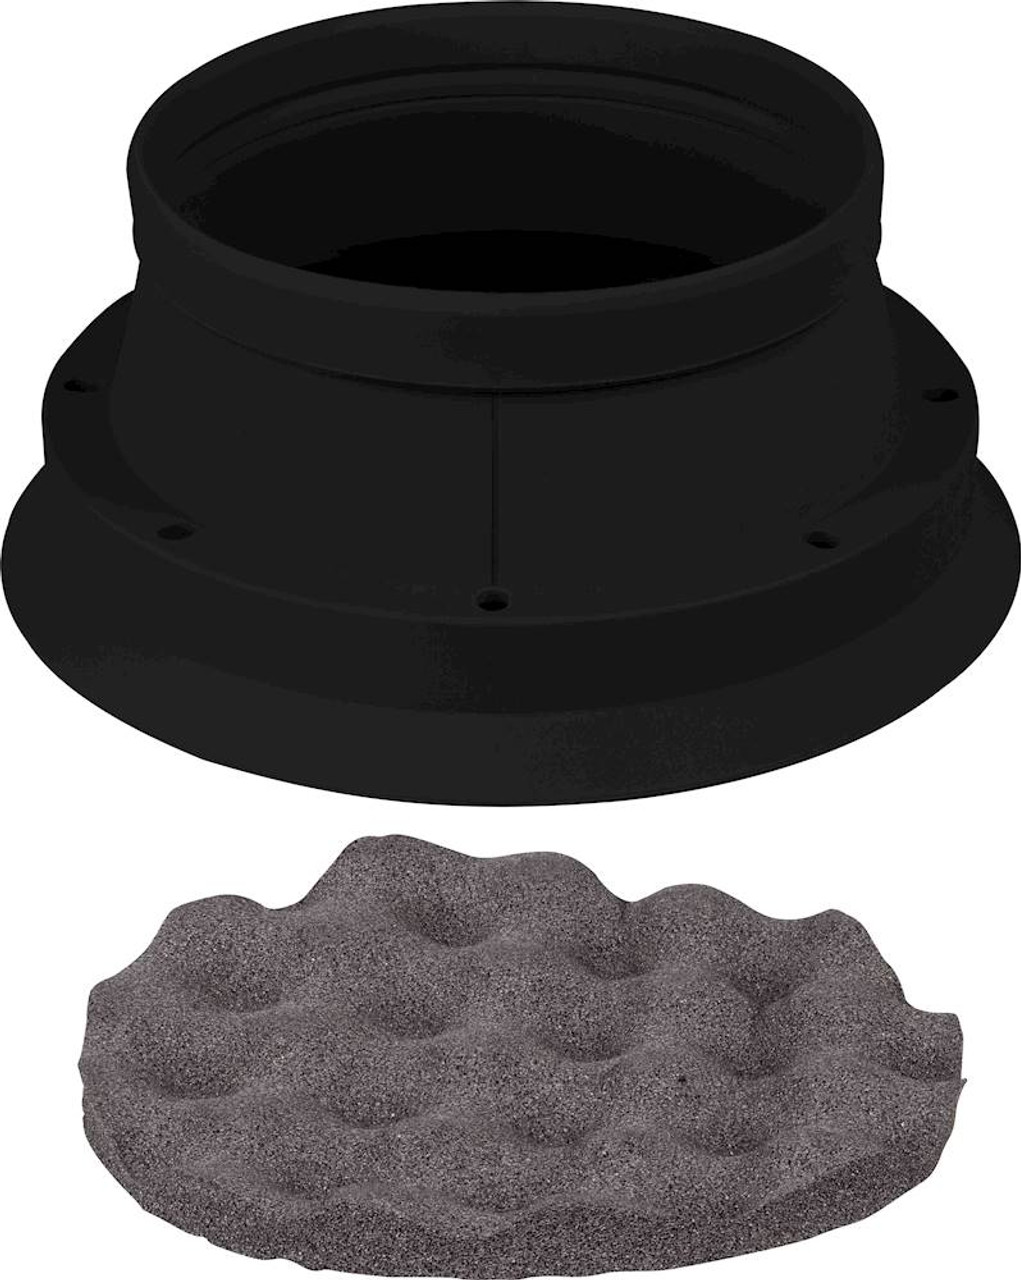 Metra - Speaker Baffle Kit for Most 6" x 9" Speakers (2-Pack) - Black